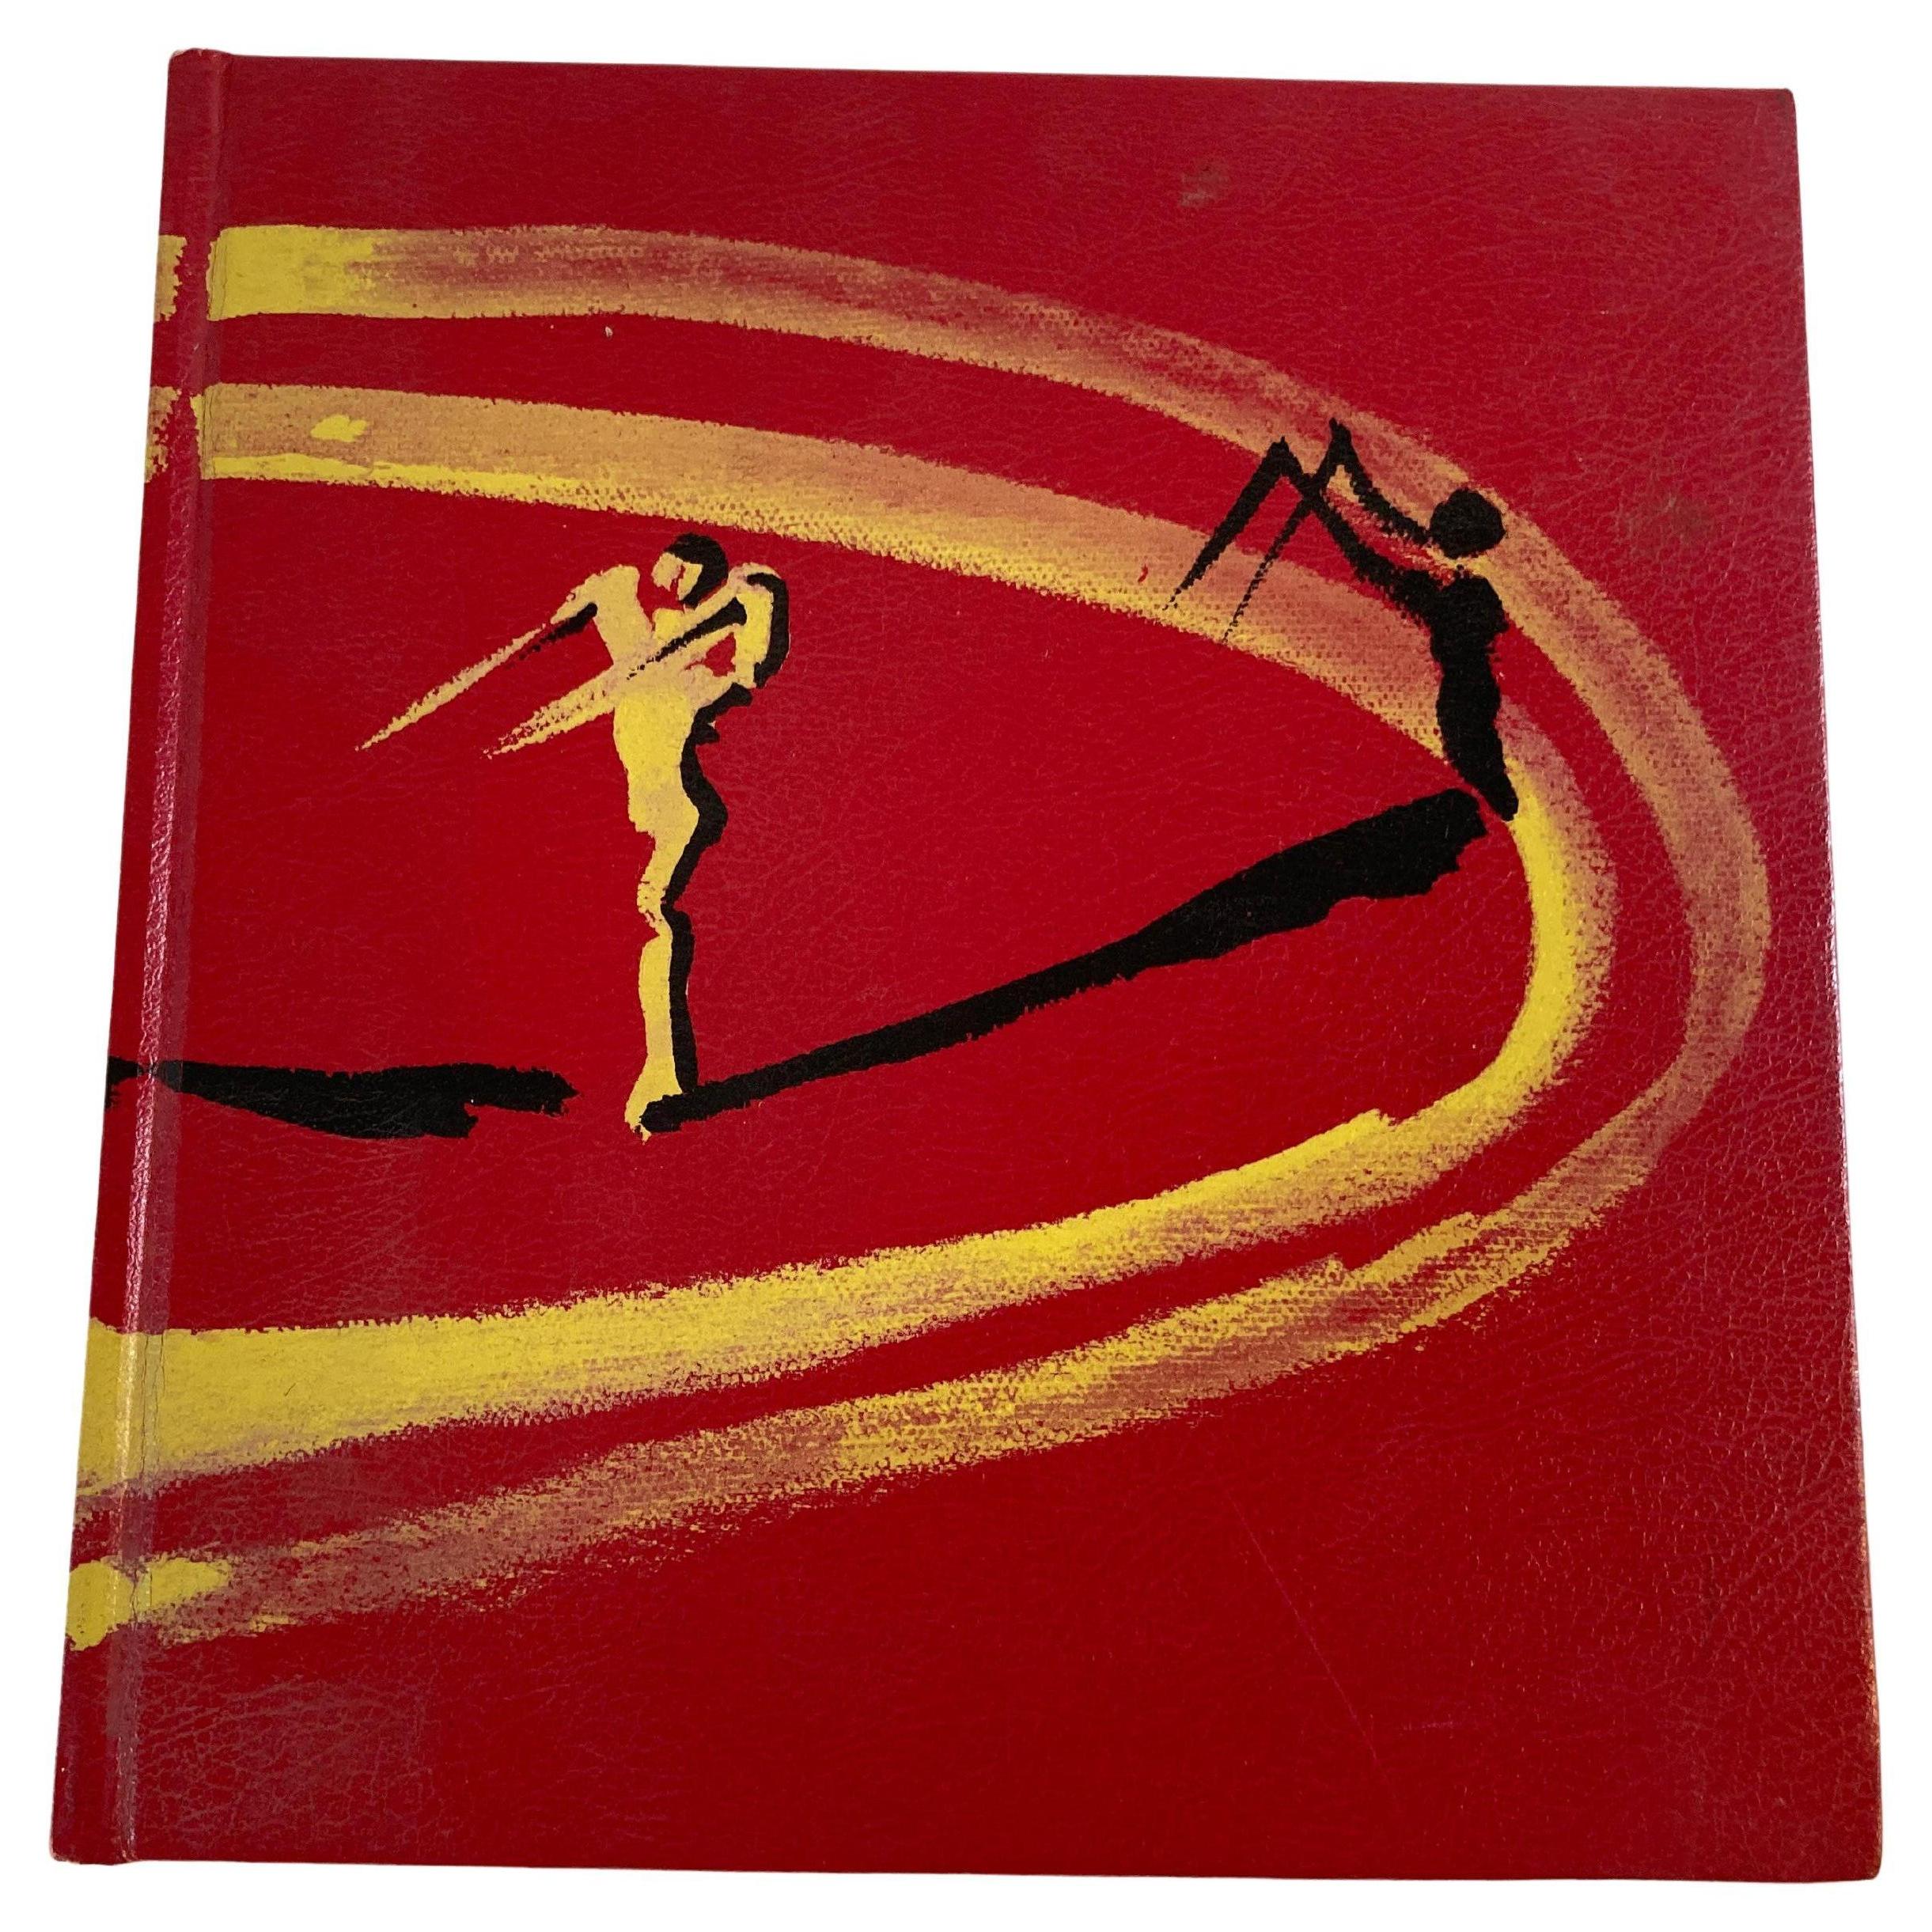 Dali Biography of Salvador Dali by Luis Romero Art Book